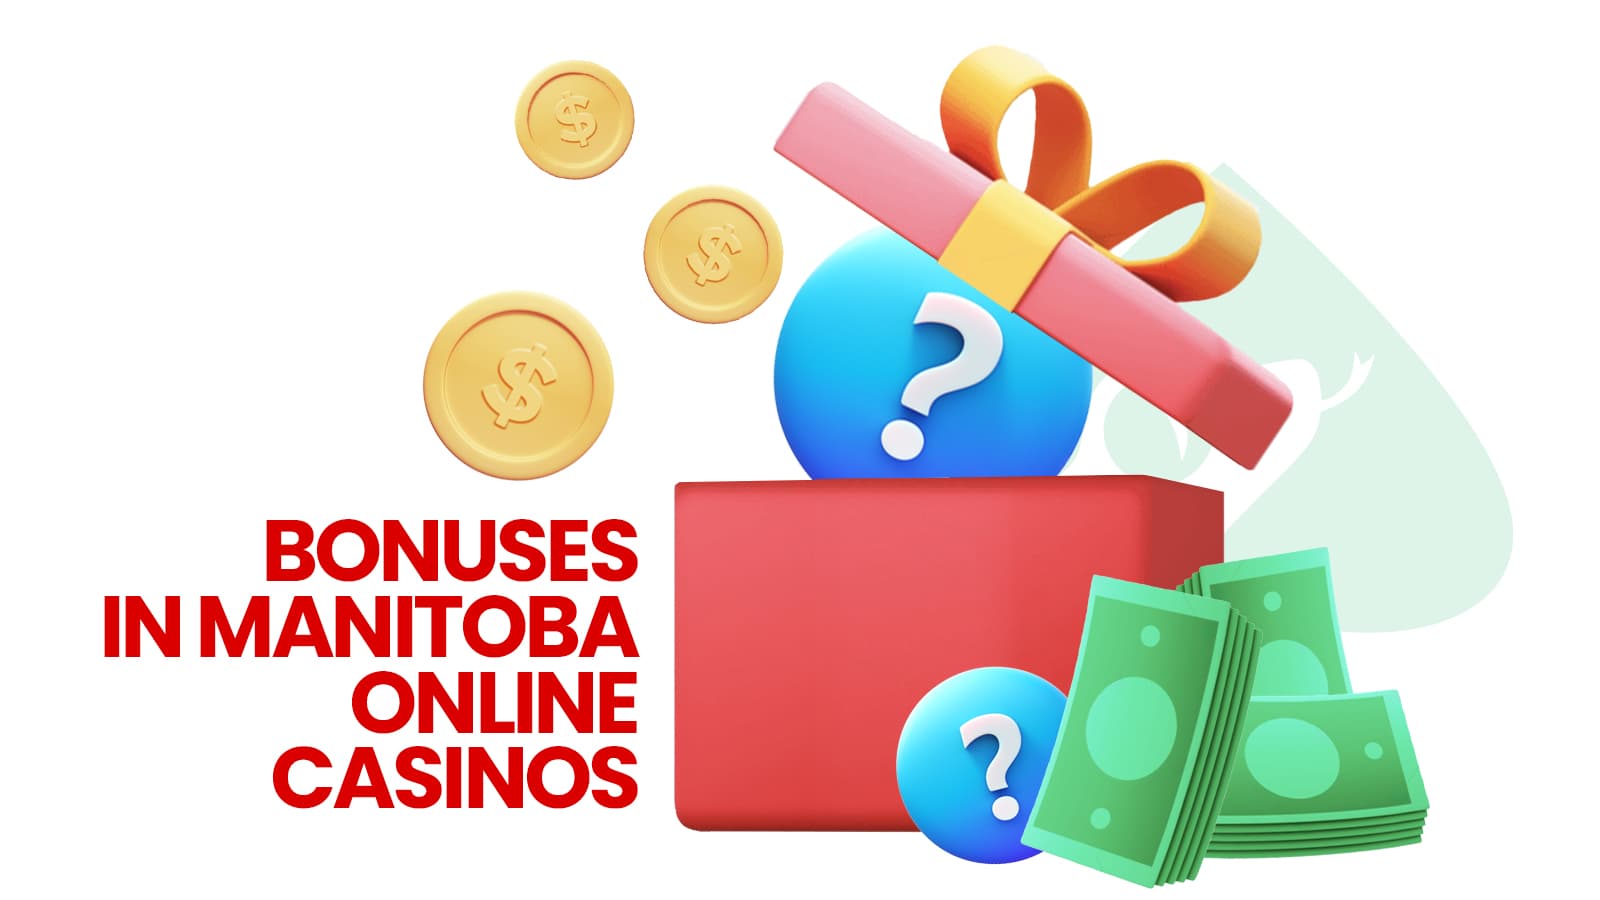 bonuses in manitoba online casinos